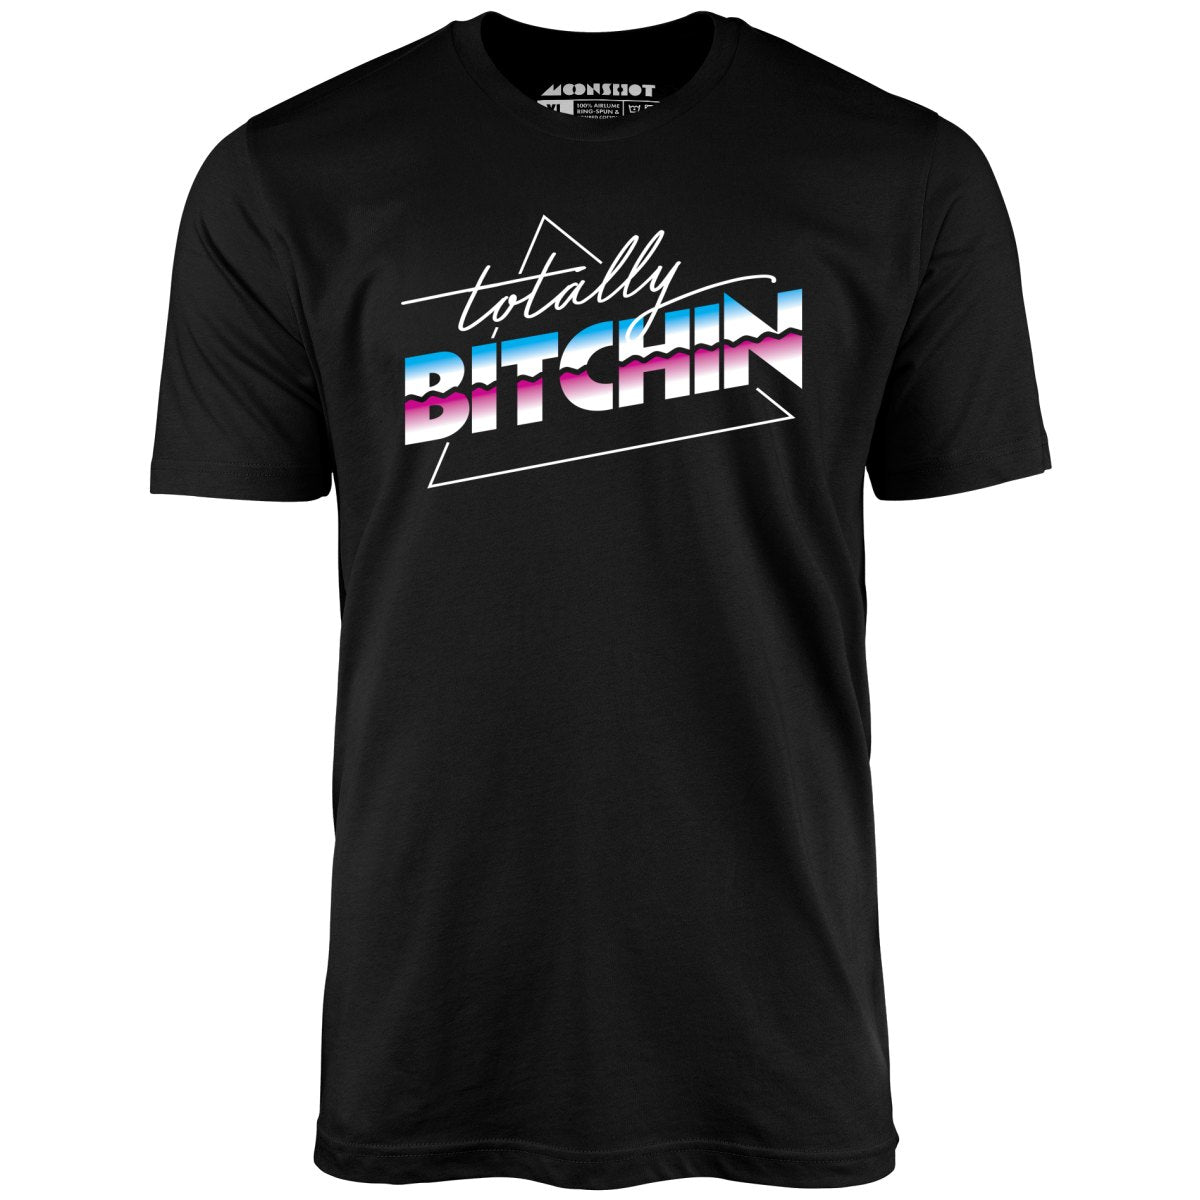 Totally Bitchin - Unisex T-Shirt